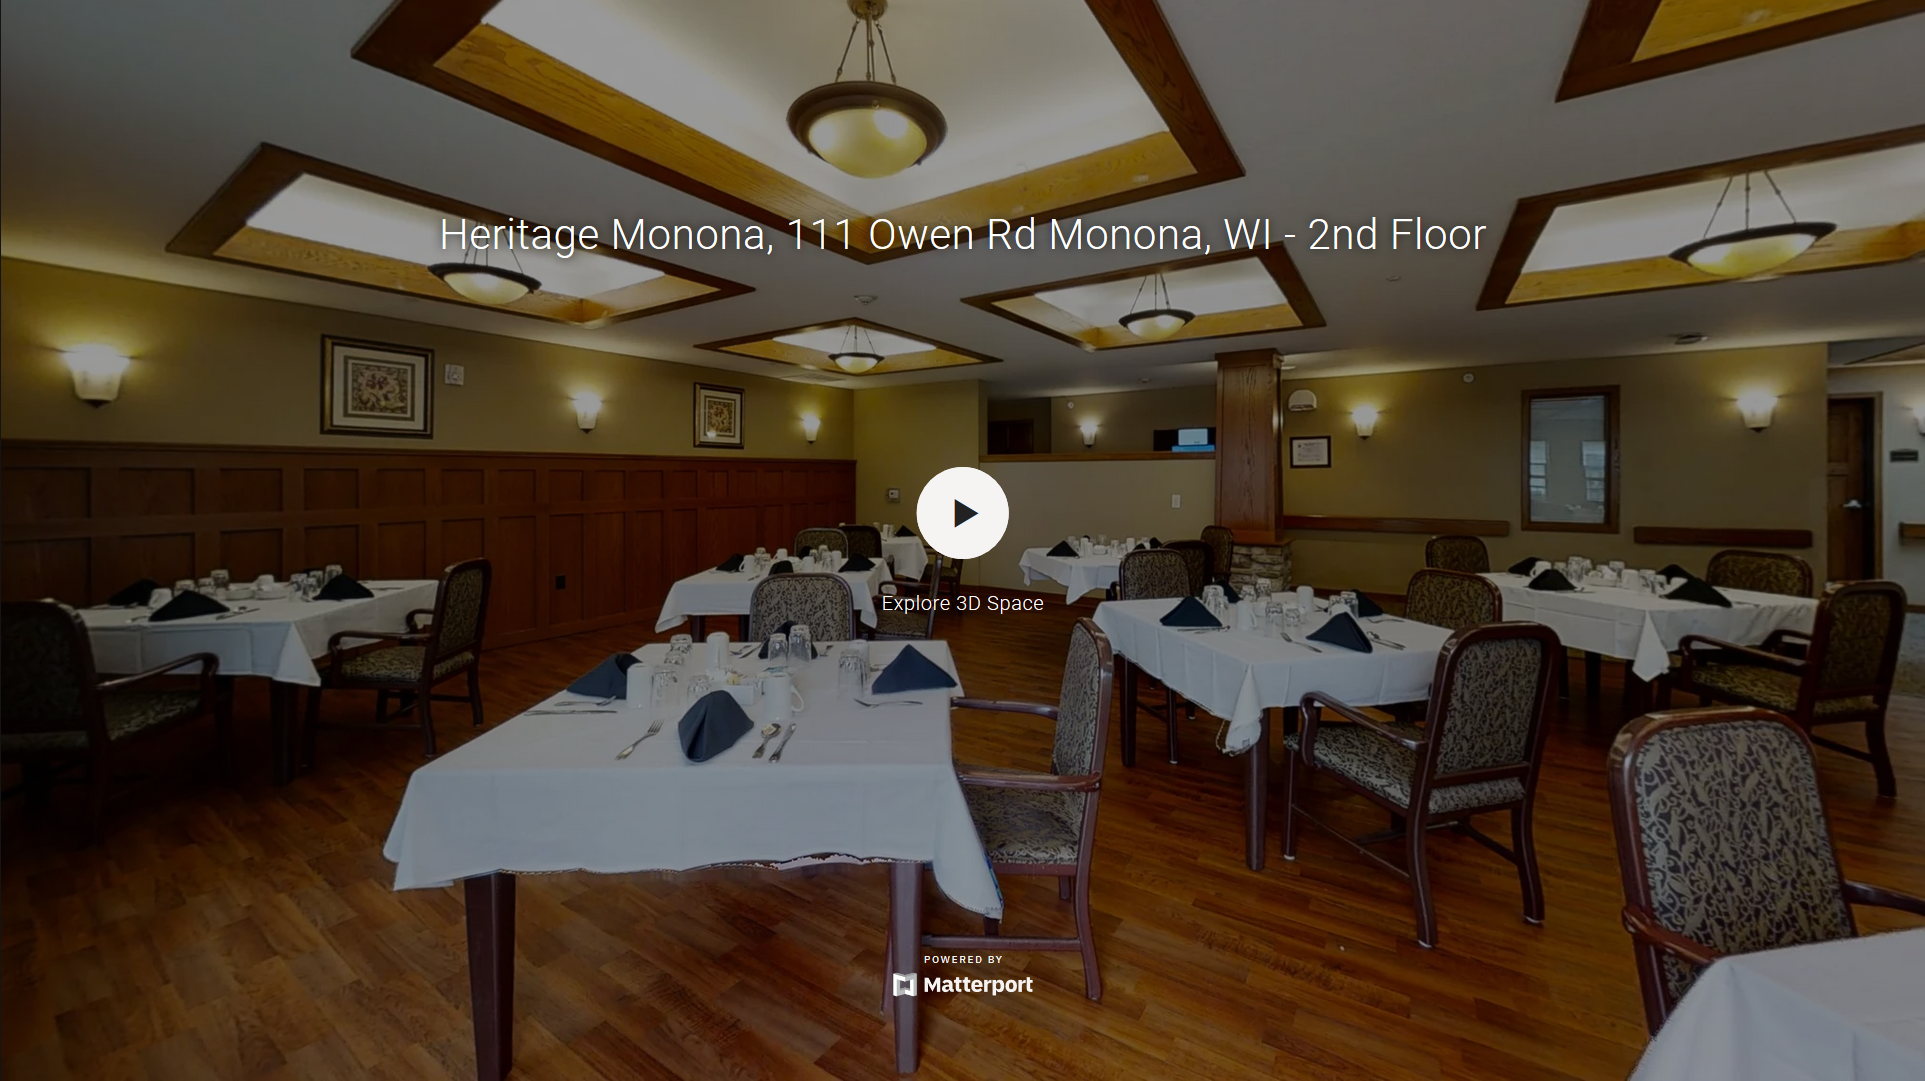 A 3D virtual tour of the Heritage Monona community second floor.